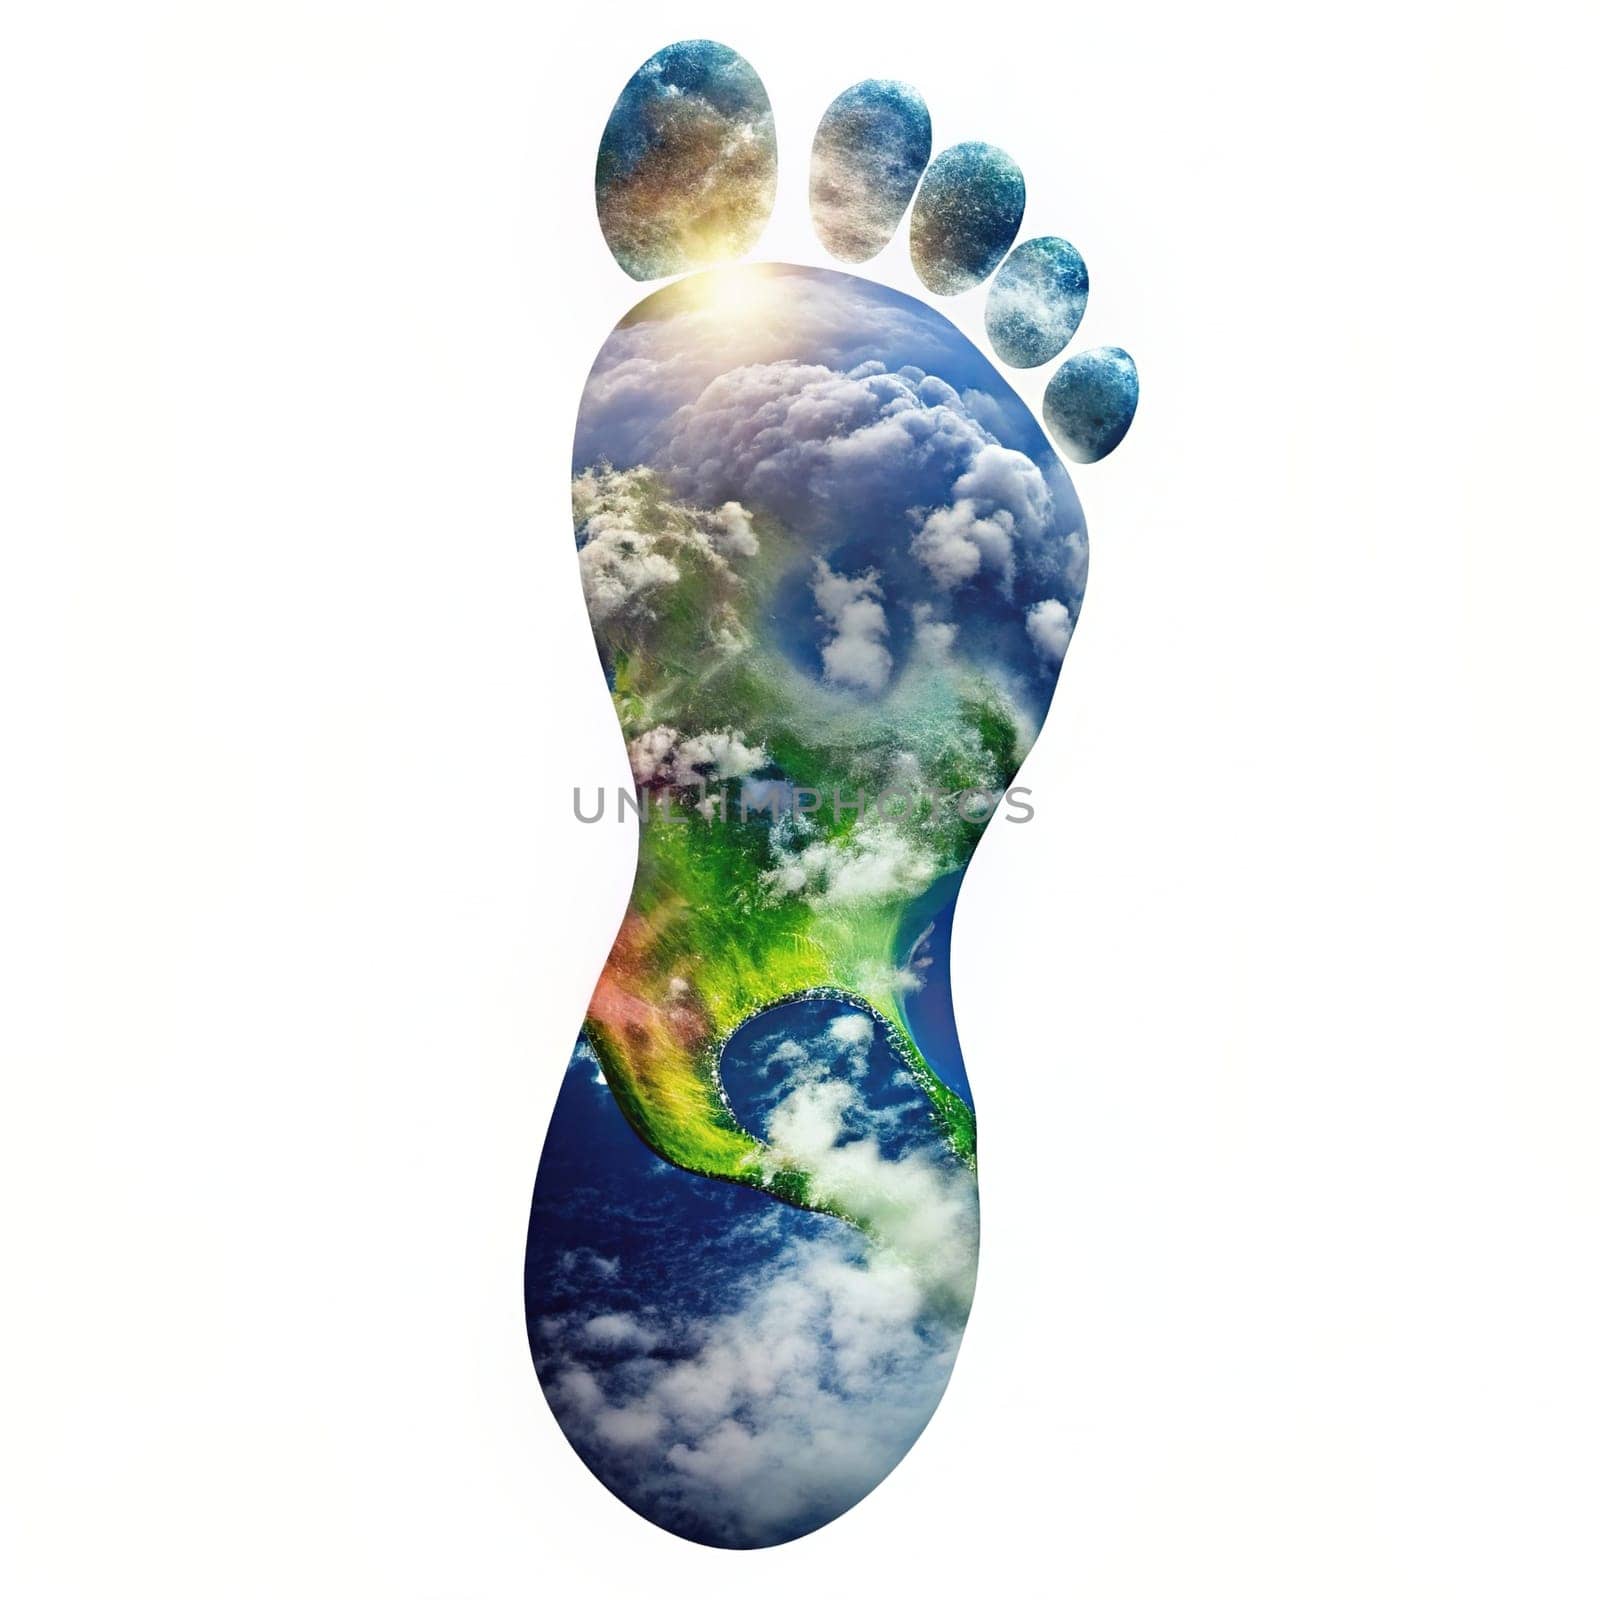 Carbon footprint that endangers natural life by yilmazsavaskandag